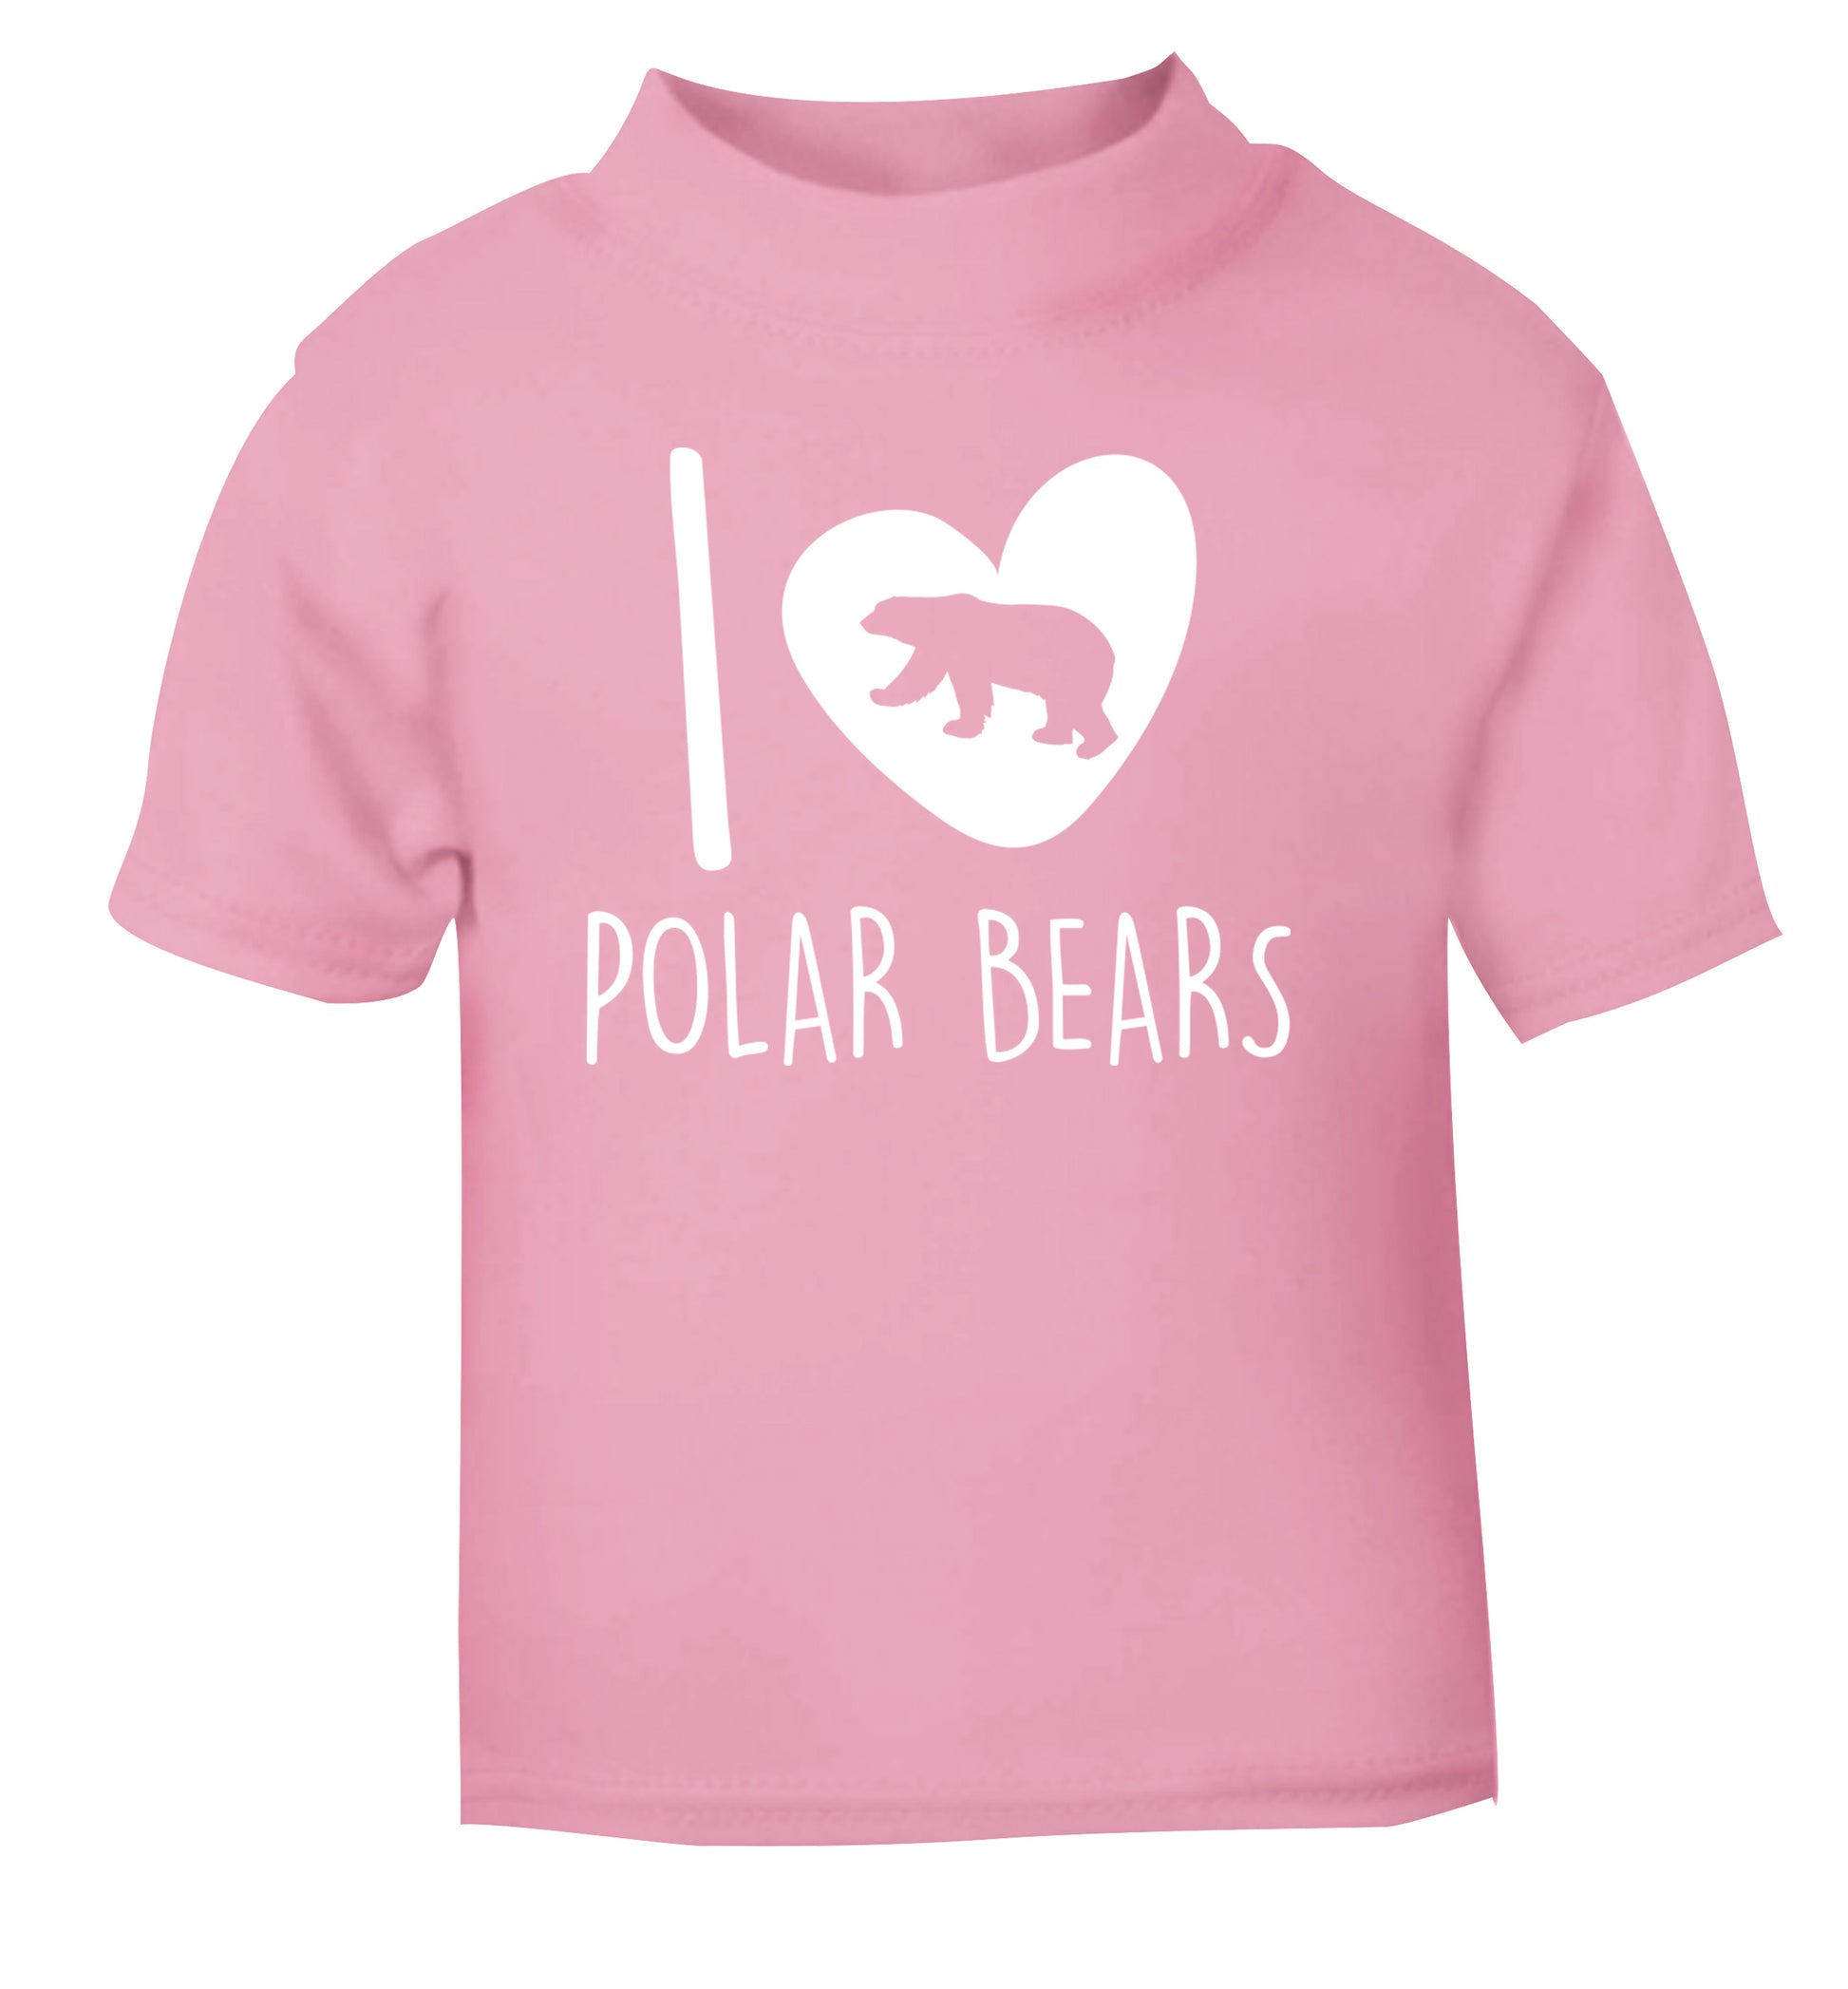 I Love Polar Bears light pink Baby Toddler Tshirt 2 Years